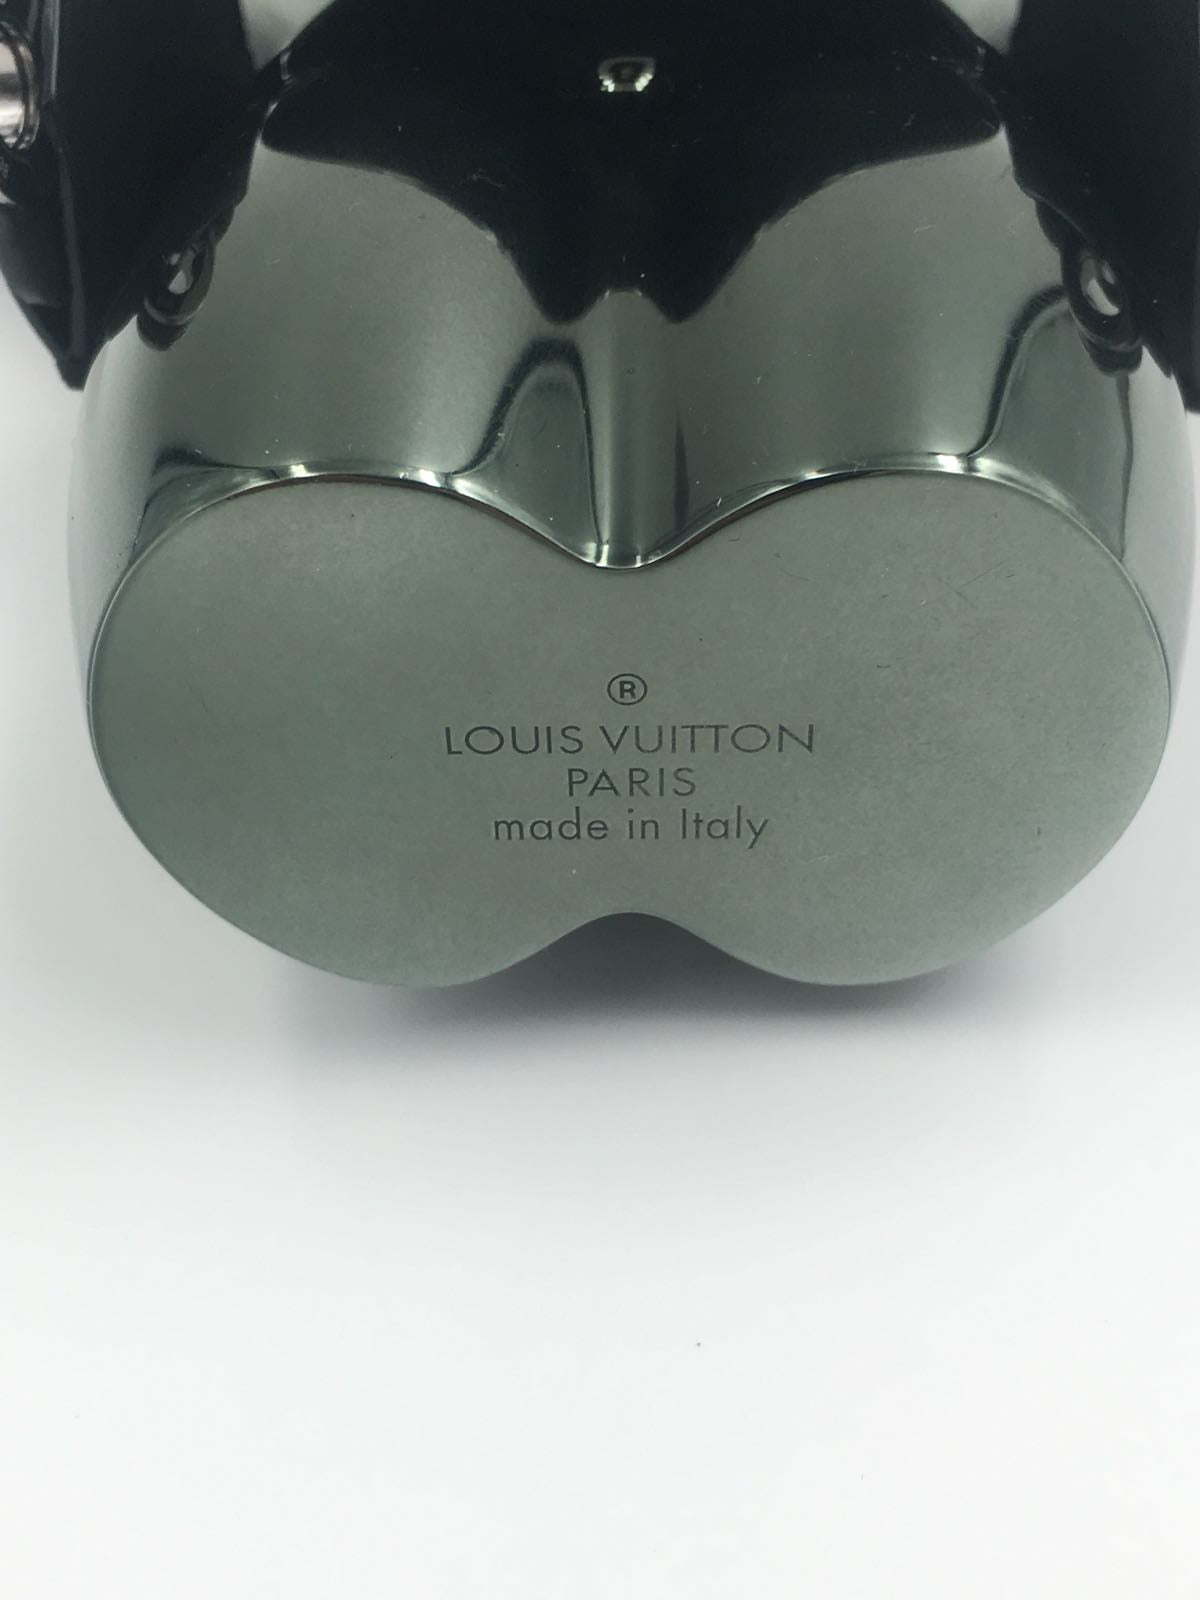 Louis Vuitton, Vivienne Metal Kaki